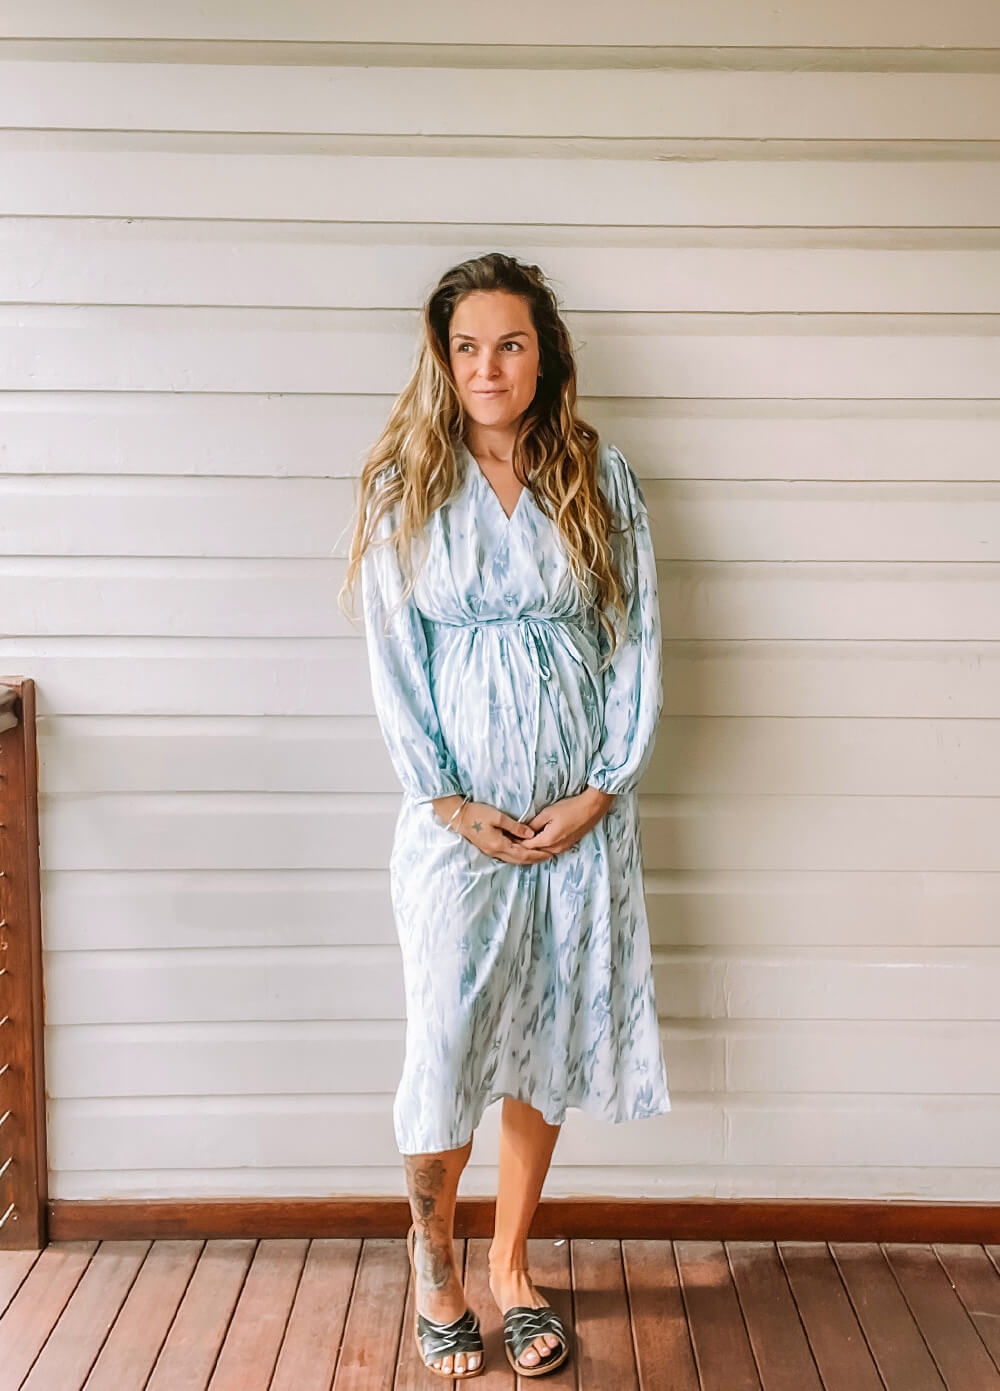 Lait & Co - Evie Maternity Midi Dress in Blue Floral